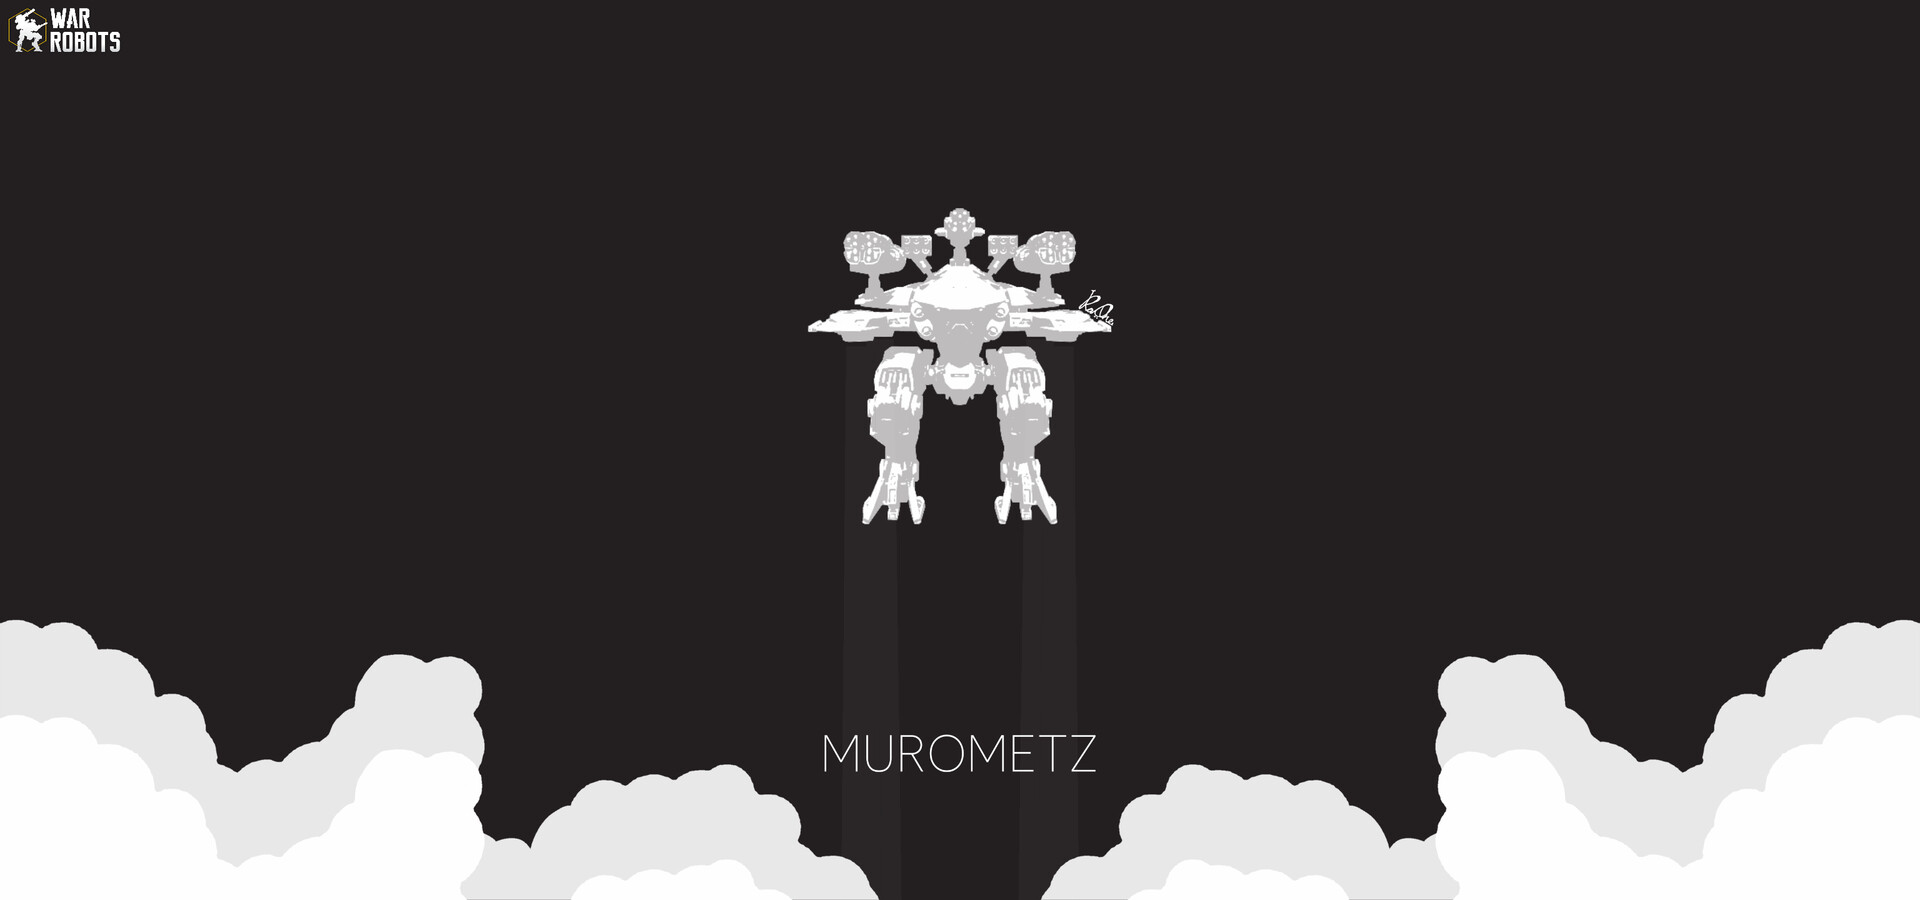 ArtStation - War Robots - Murometz titan